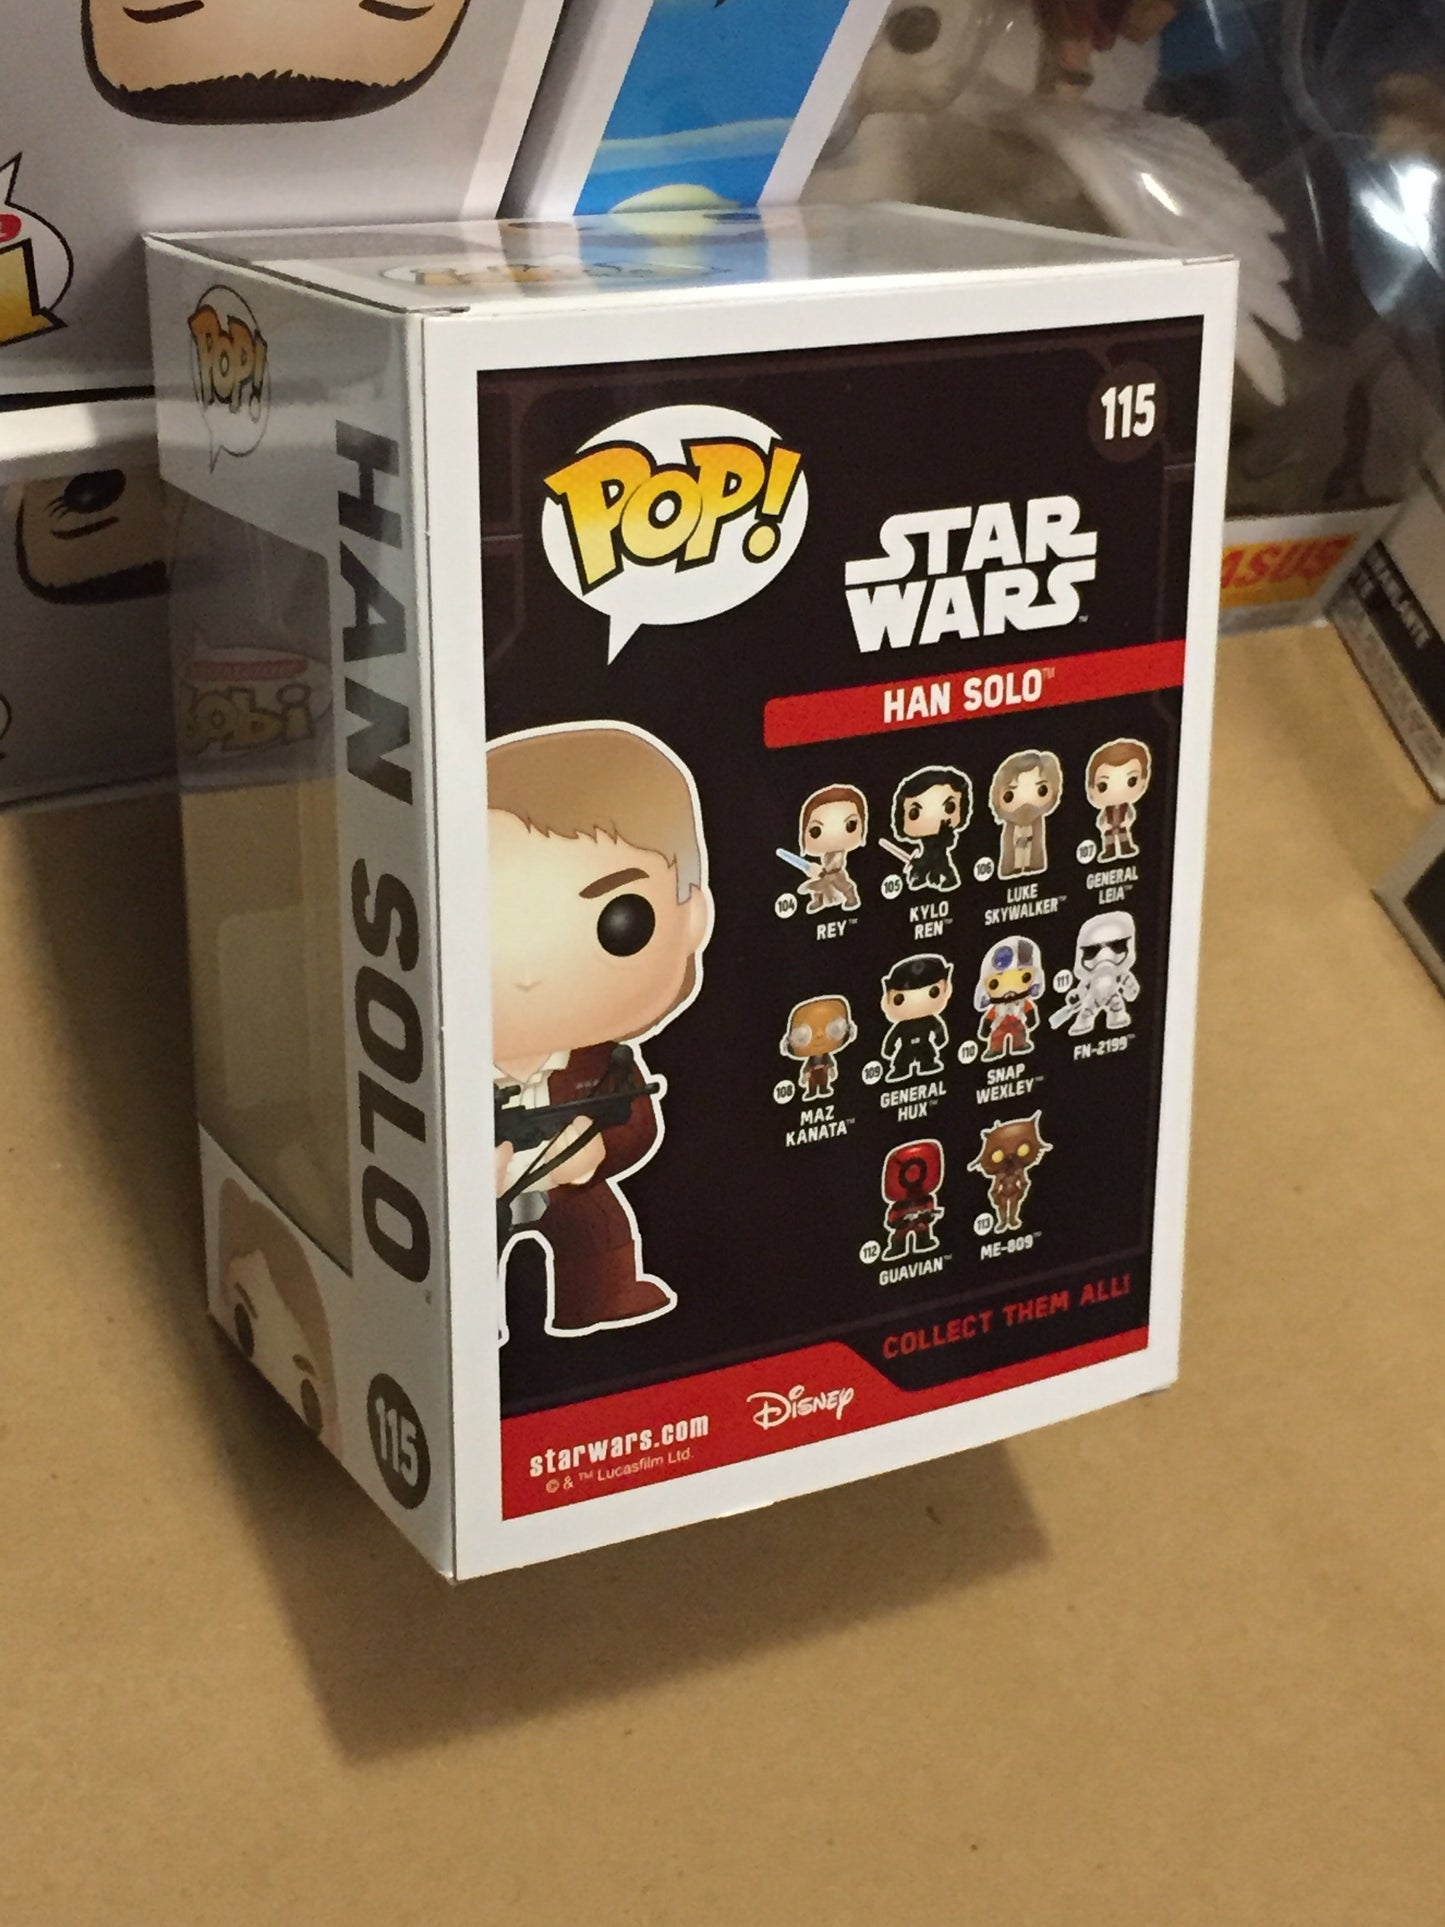 Star Wars Han Solo with bowcaster exclusive 115 Funko Pop! vinyl figure